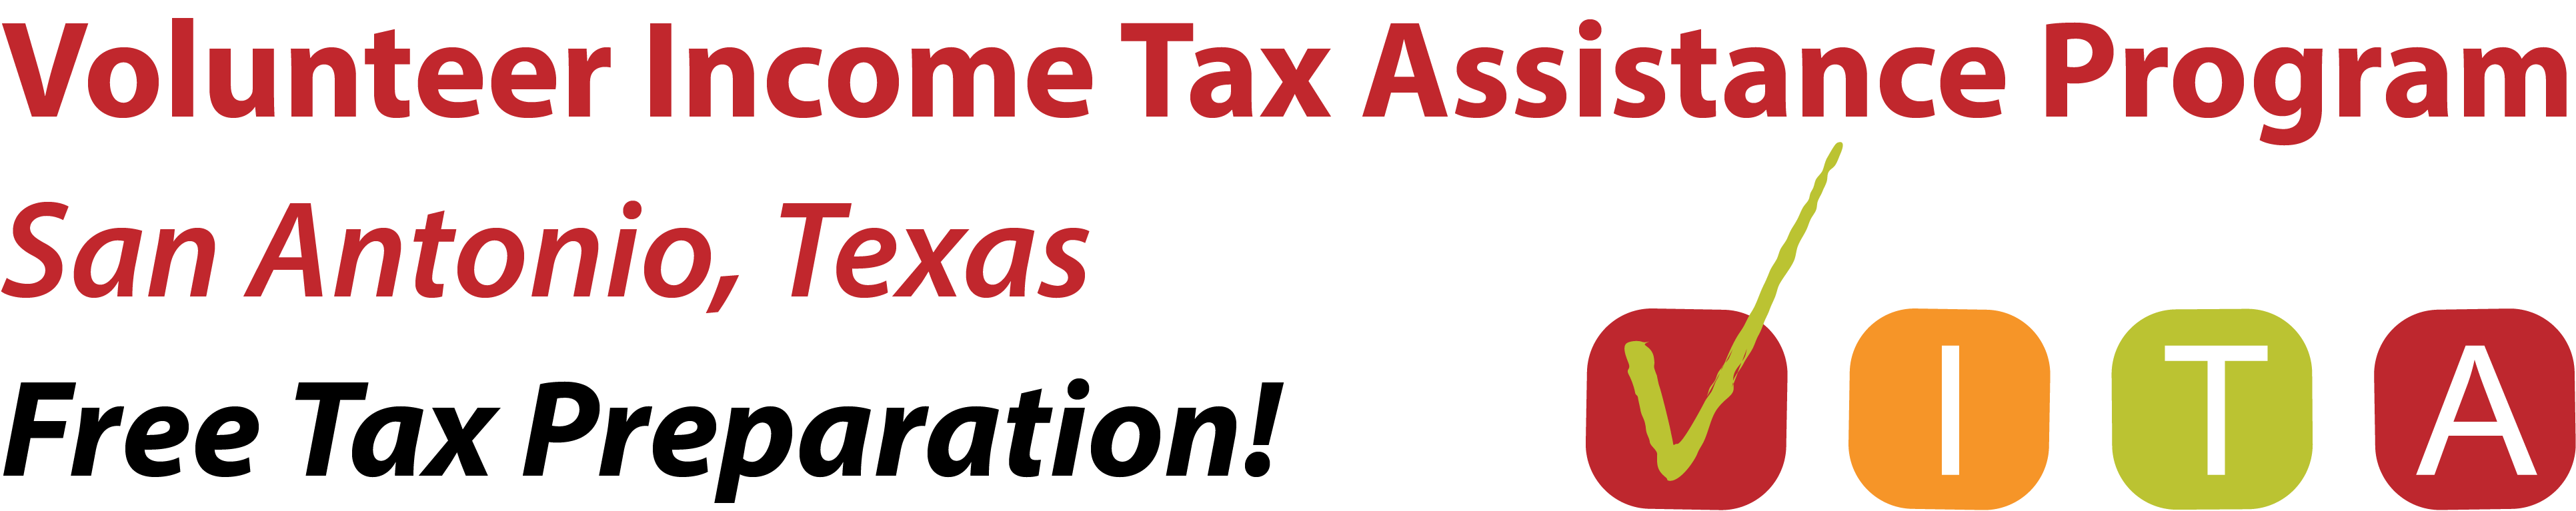 Volunteer Income Tax Assistance Program - San Antonio, Texas - Free Tax Preparation